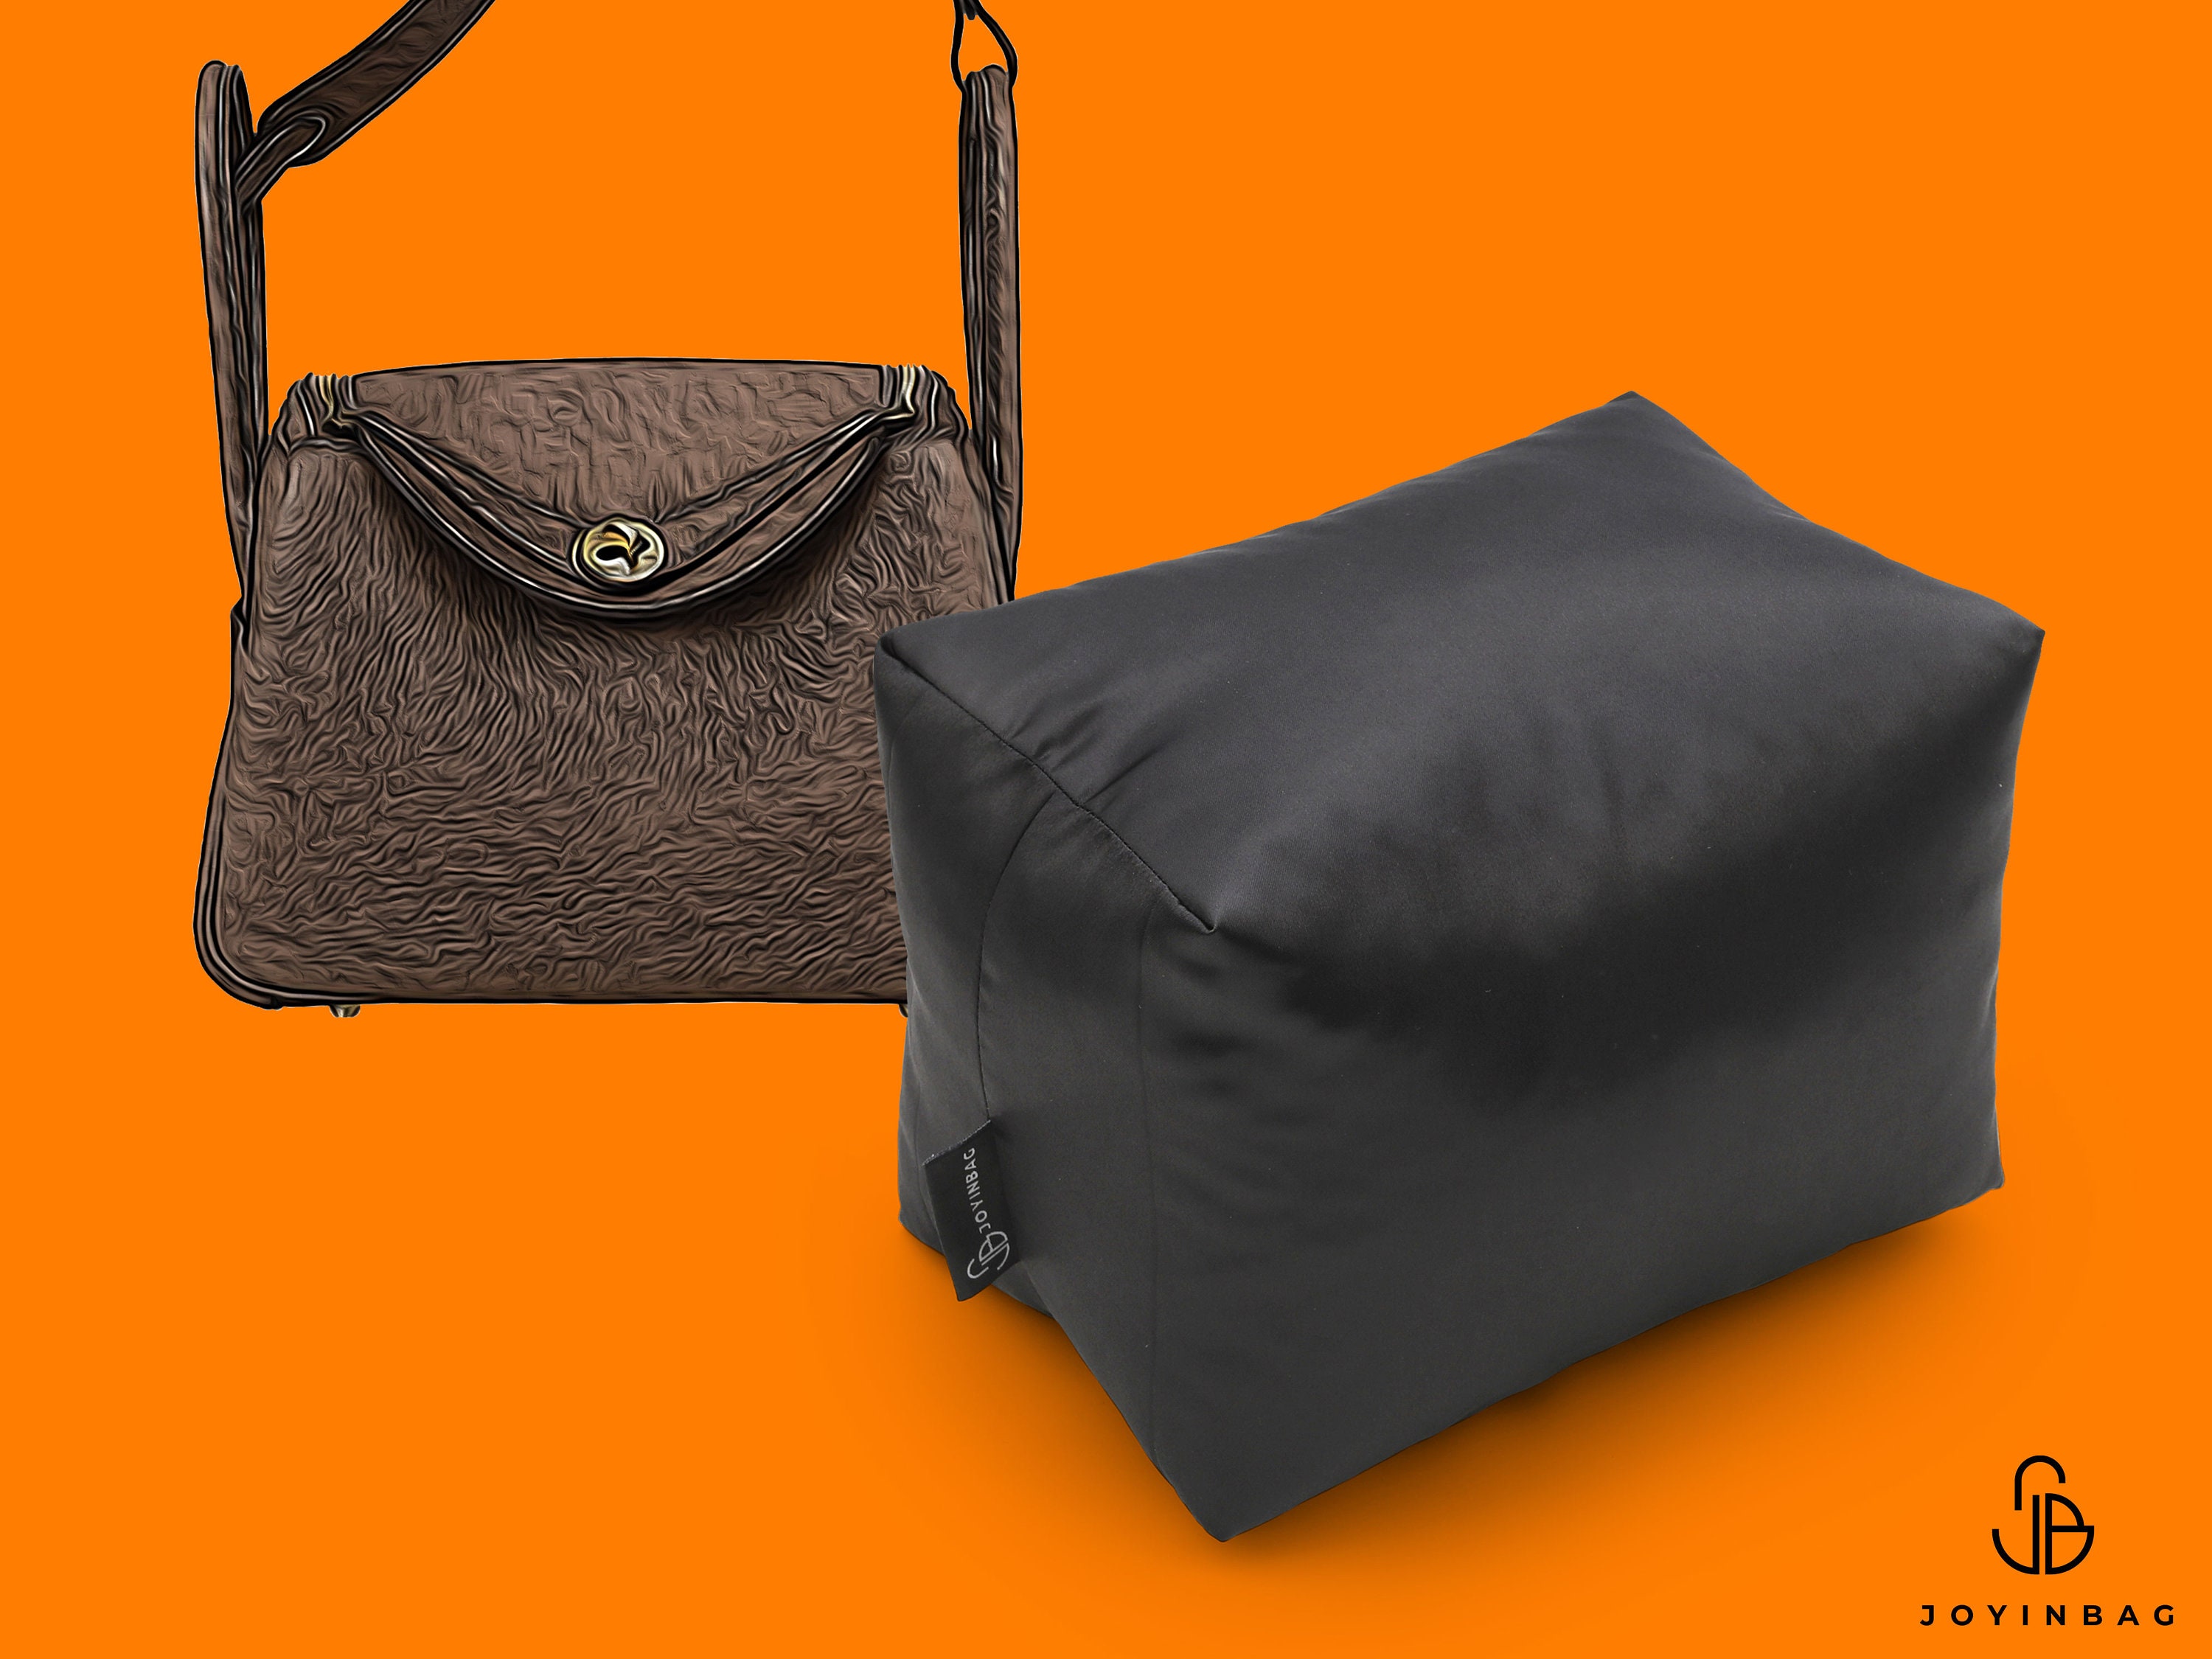 Hermès - Authenticated Kelly Mini Handbag - Leather Black Plain for Women, Never Worn